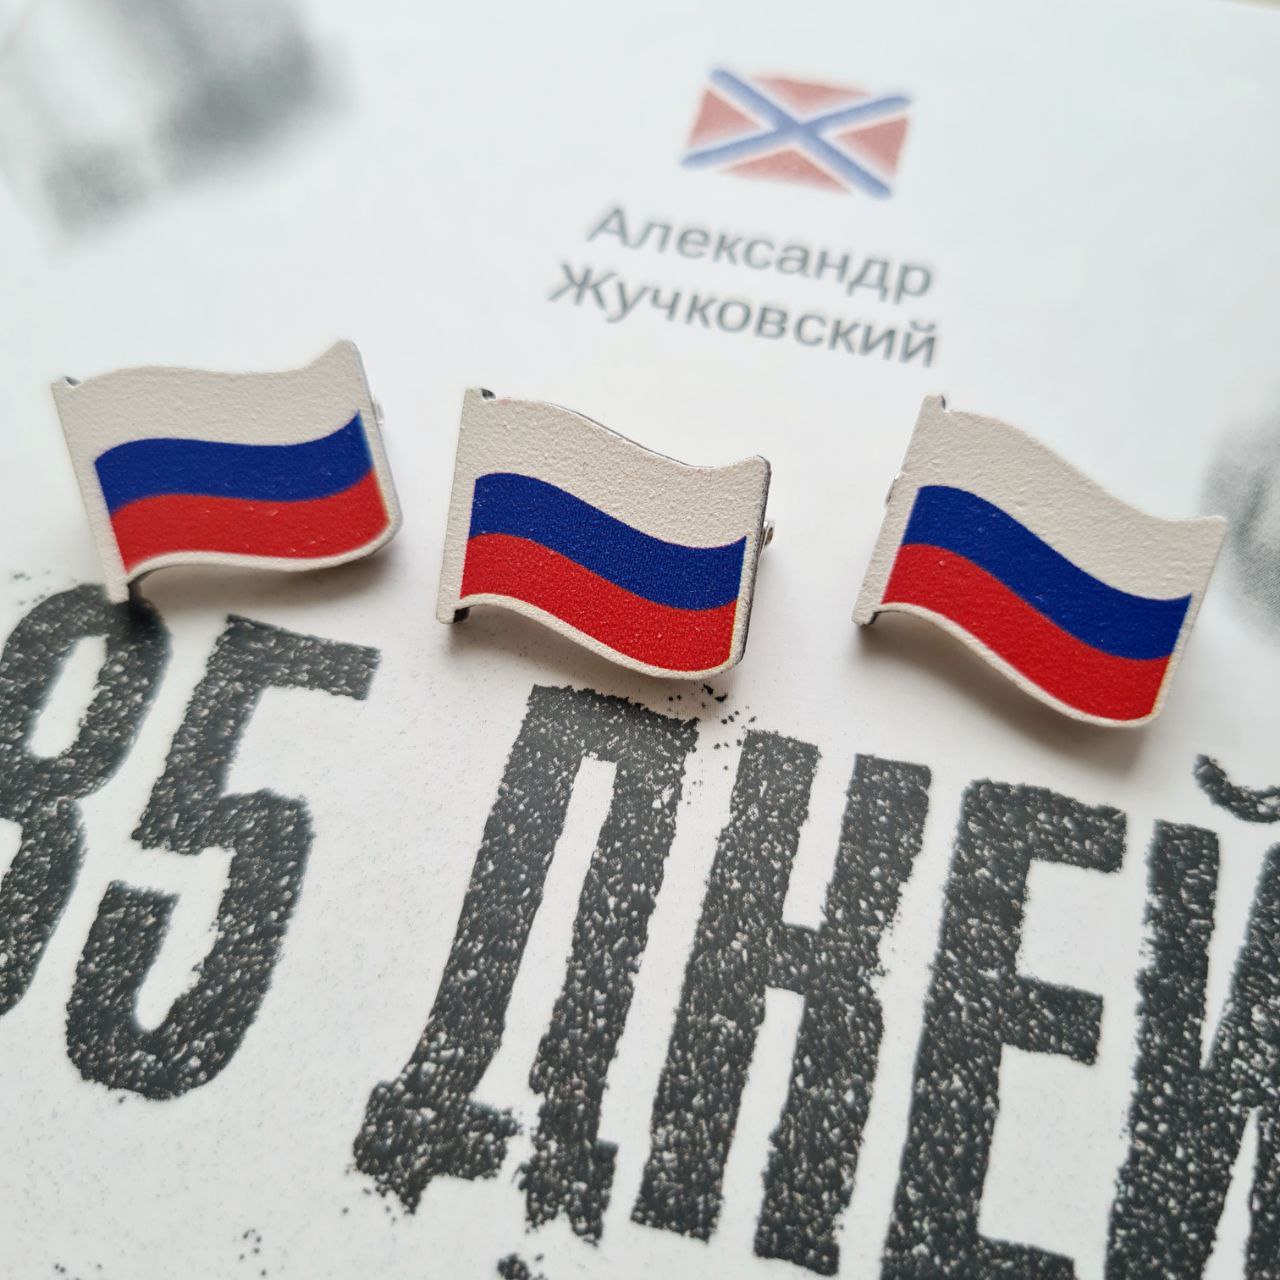 Значок с российским флагом